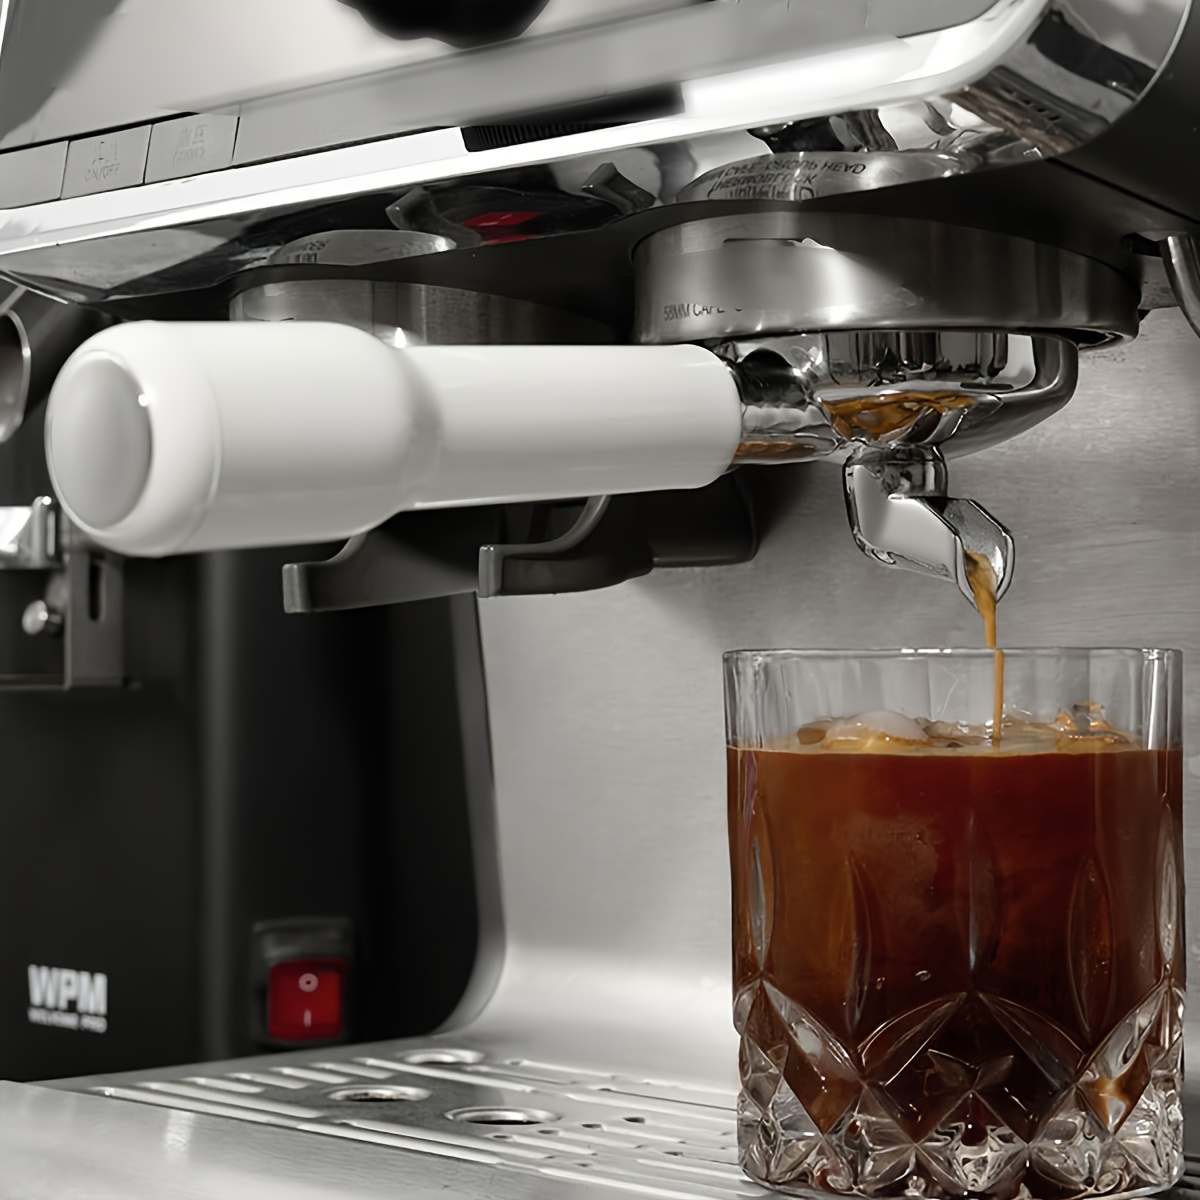  Máquina de café, cafetera americana para el hogar, cafetera por  goteo, tetera automática, tetera, 0.6 litros, puede mantener el calor por  PPLL (Color azul cielo, tipo de enchufe: UE) : Hogar